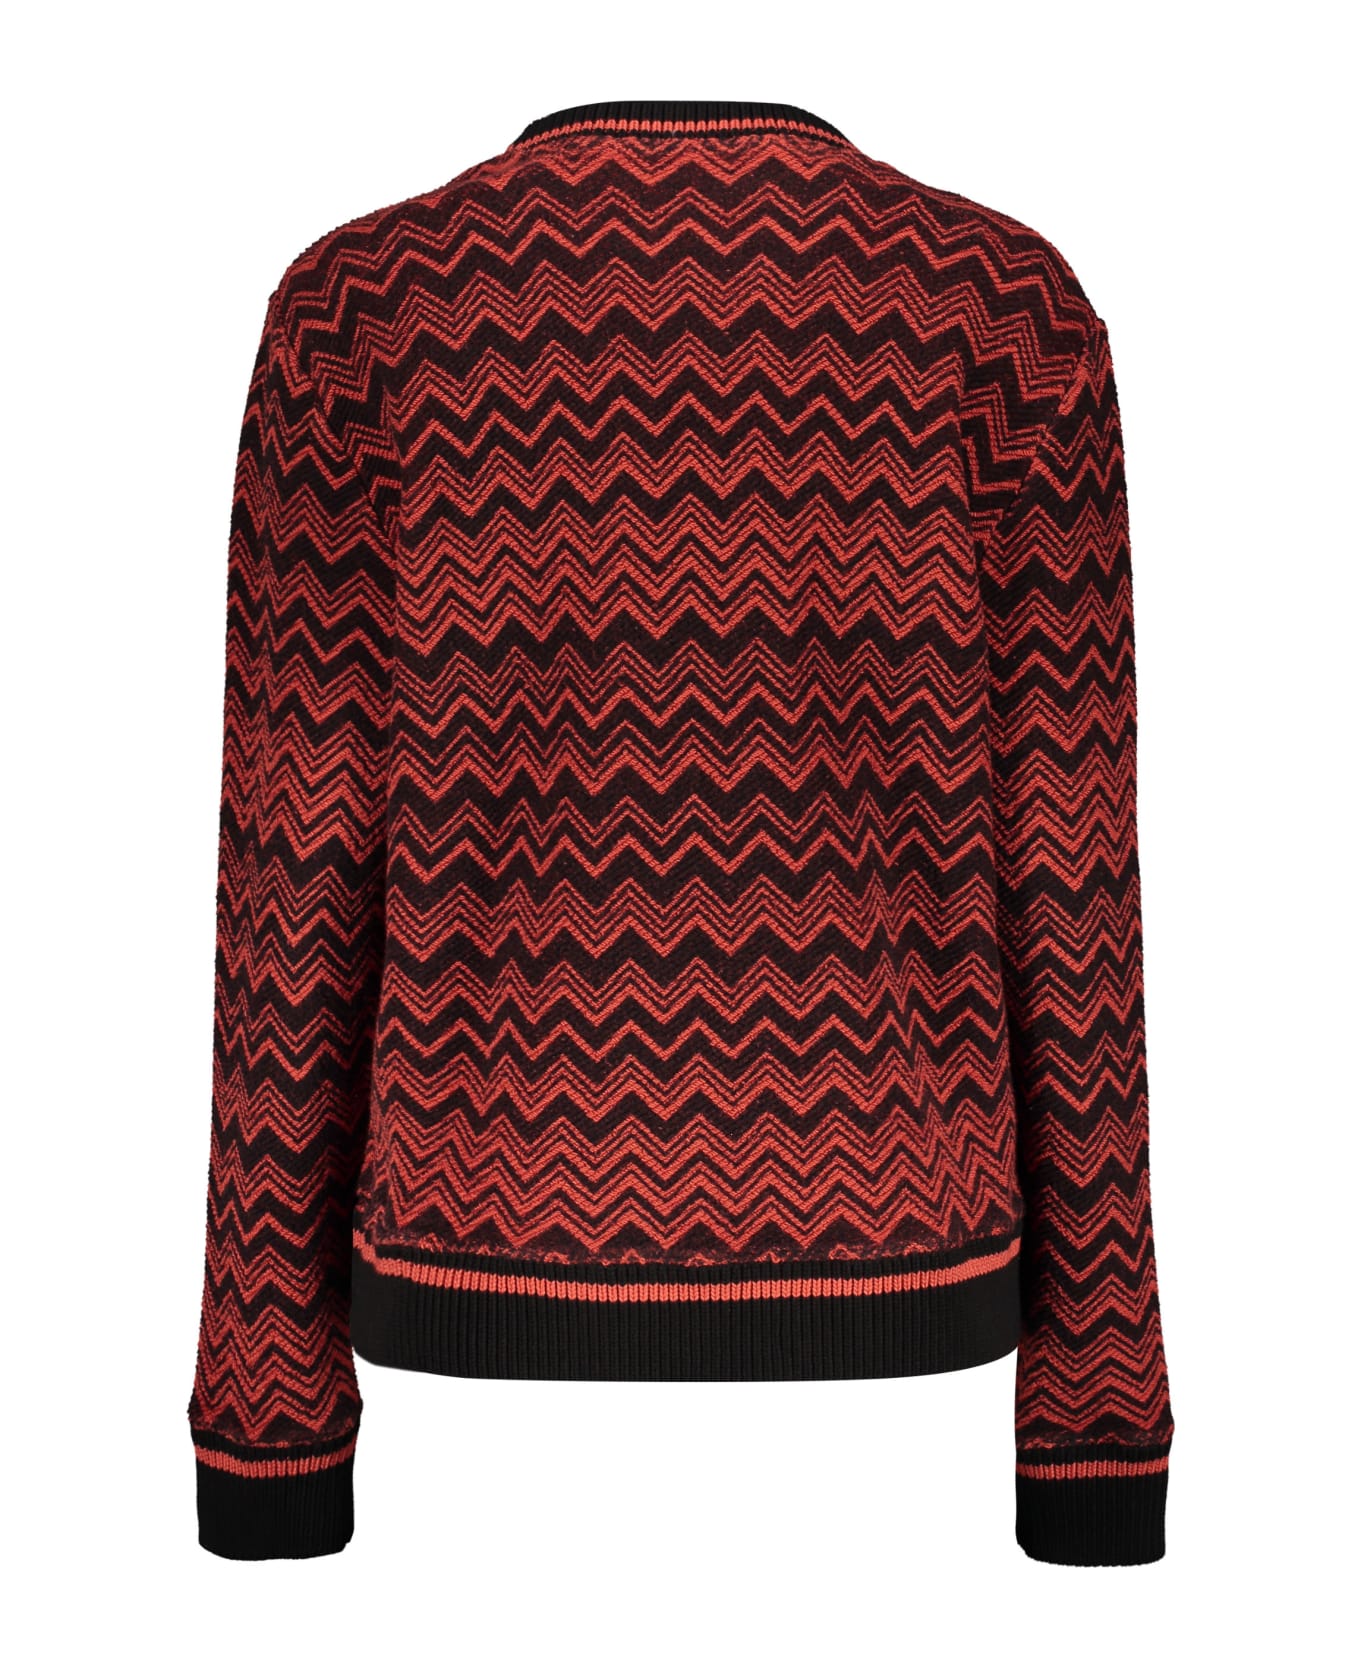 Missoni Cotton Sweatshirt - red ニットウェア